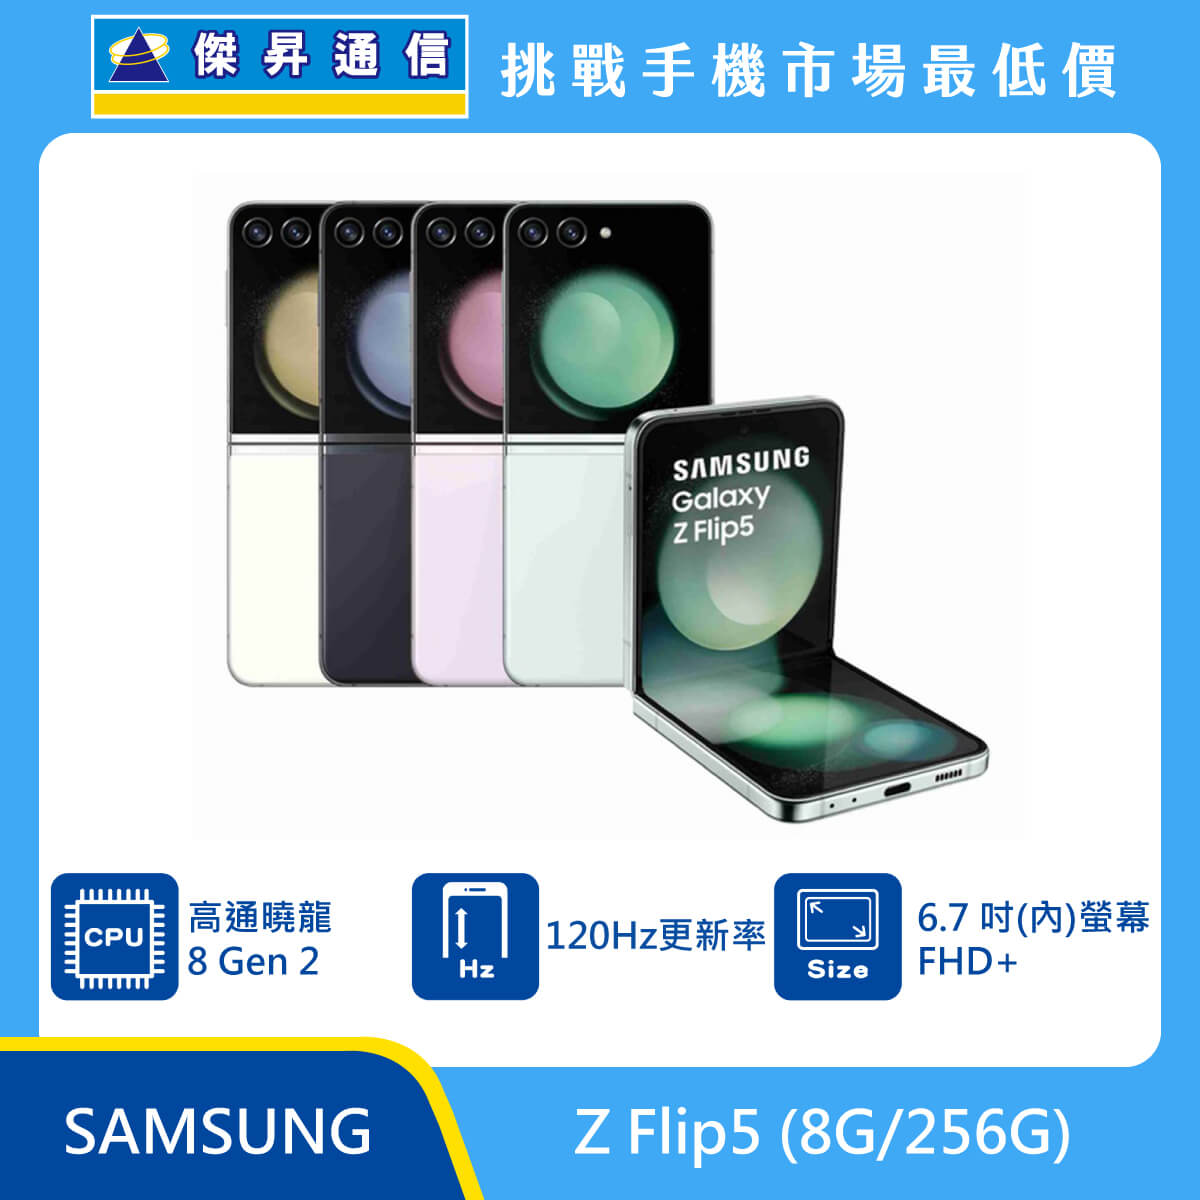 SAMSUNG Z Flip5 (8G/256G)